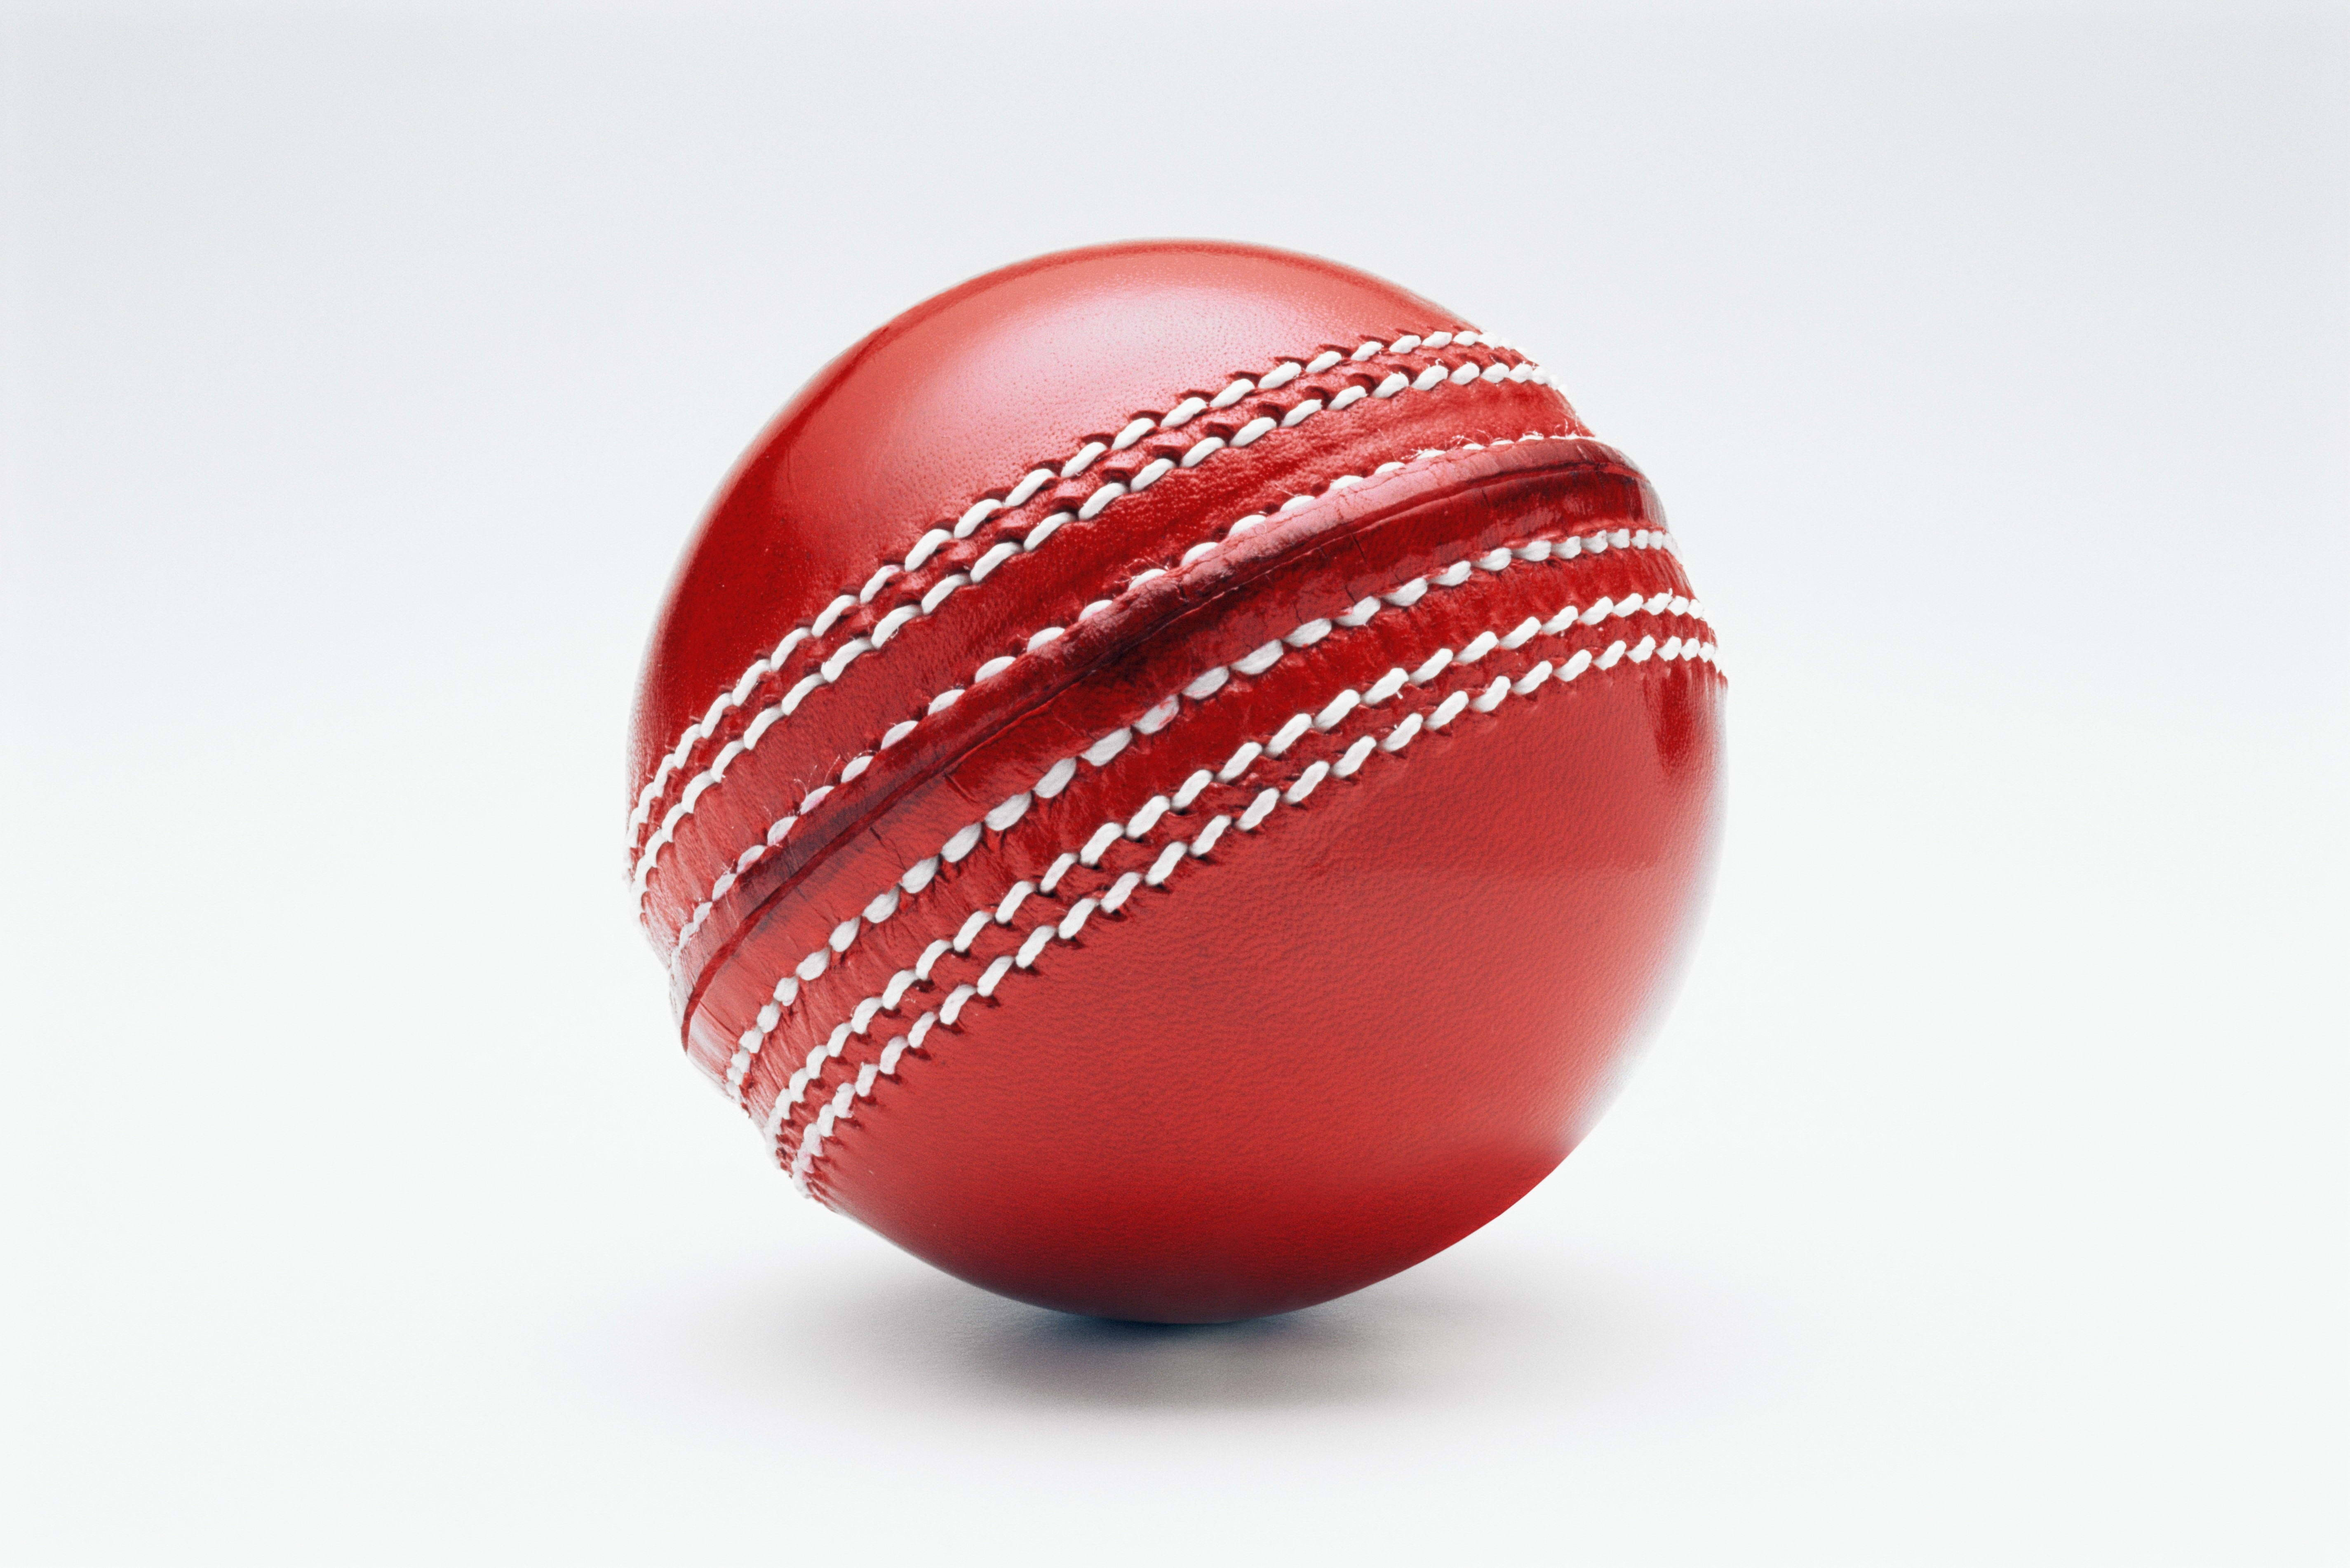 Simple Red Cricket Ball 4K Wallpaper